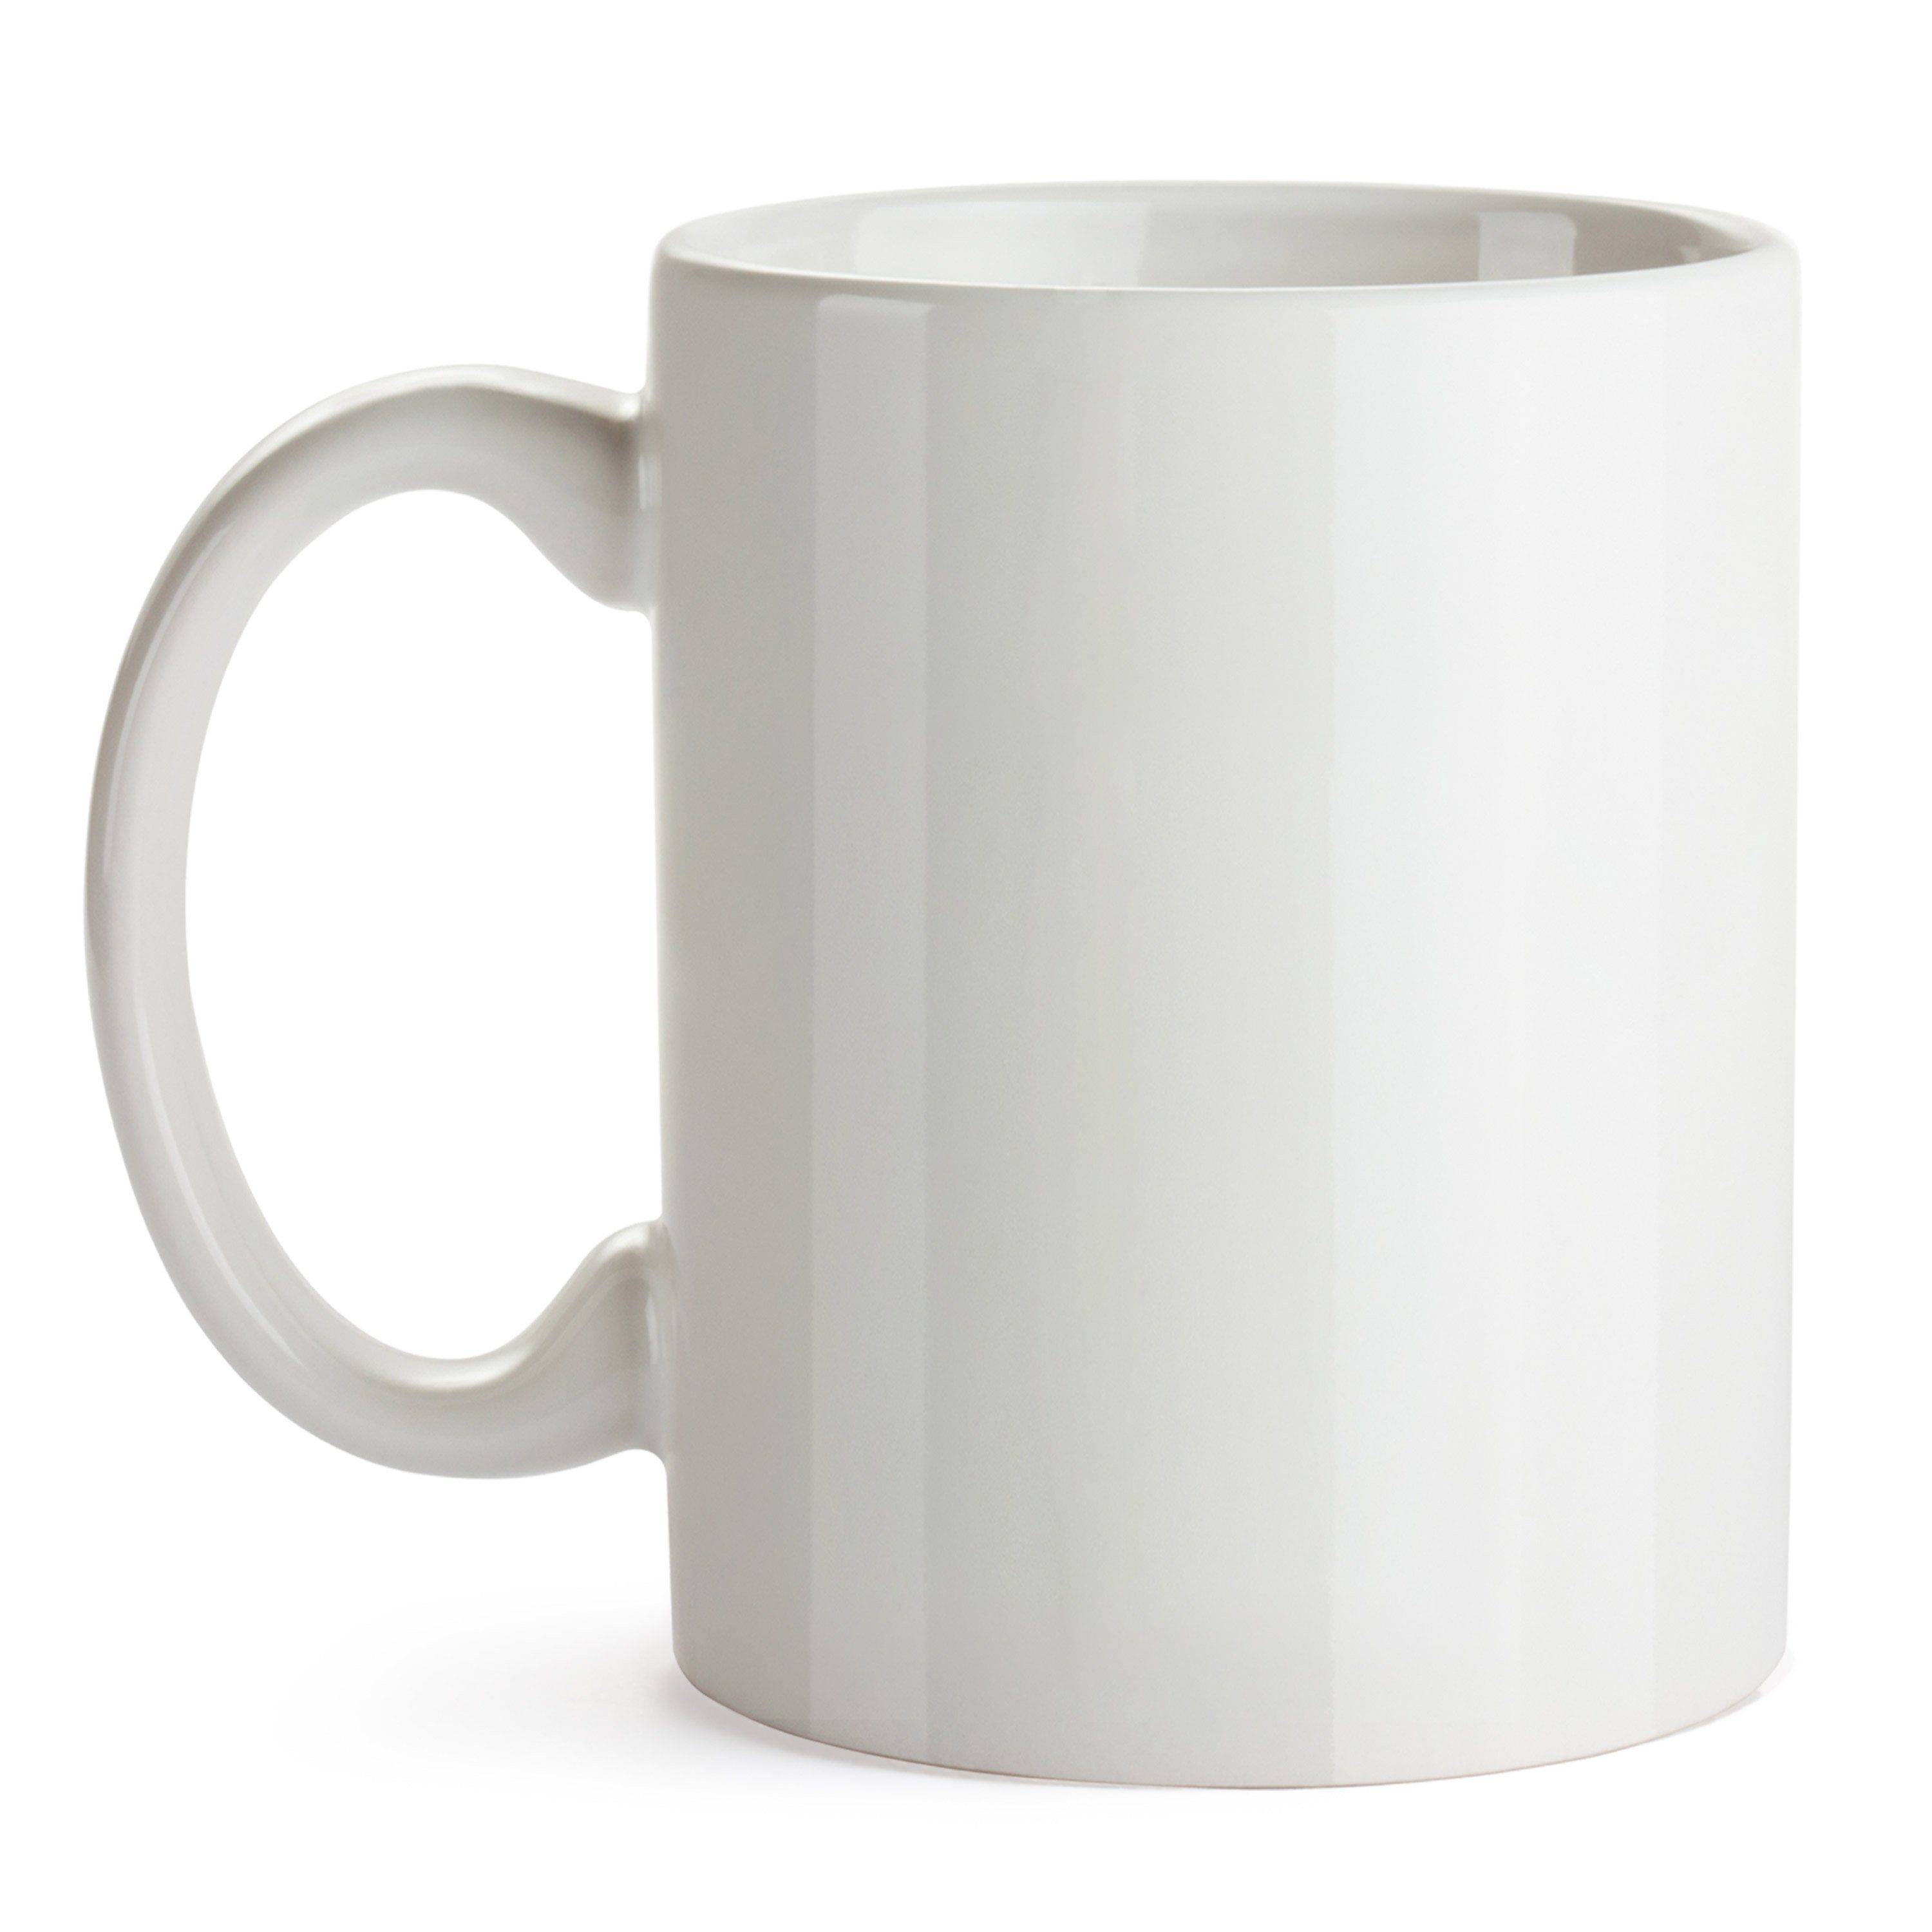 Mr. & Mrs. Panda Keramik Teetasse, Geschenk, der Tasse Welt - Kaffeetasse, Weiß - Ka, Tischler Bester